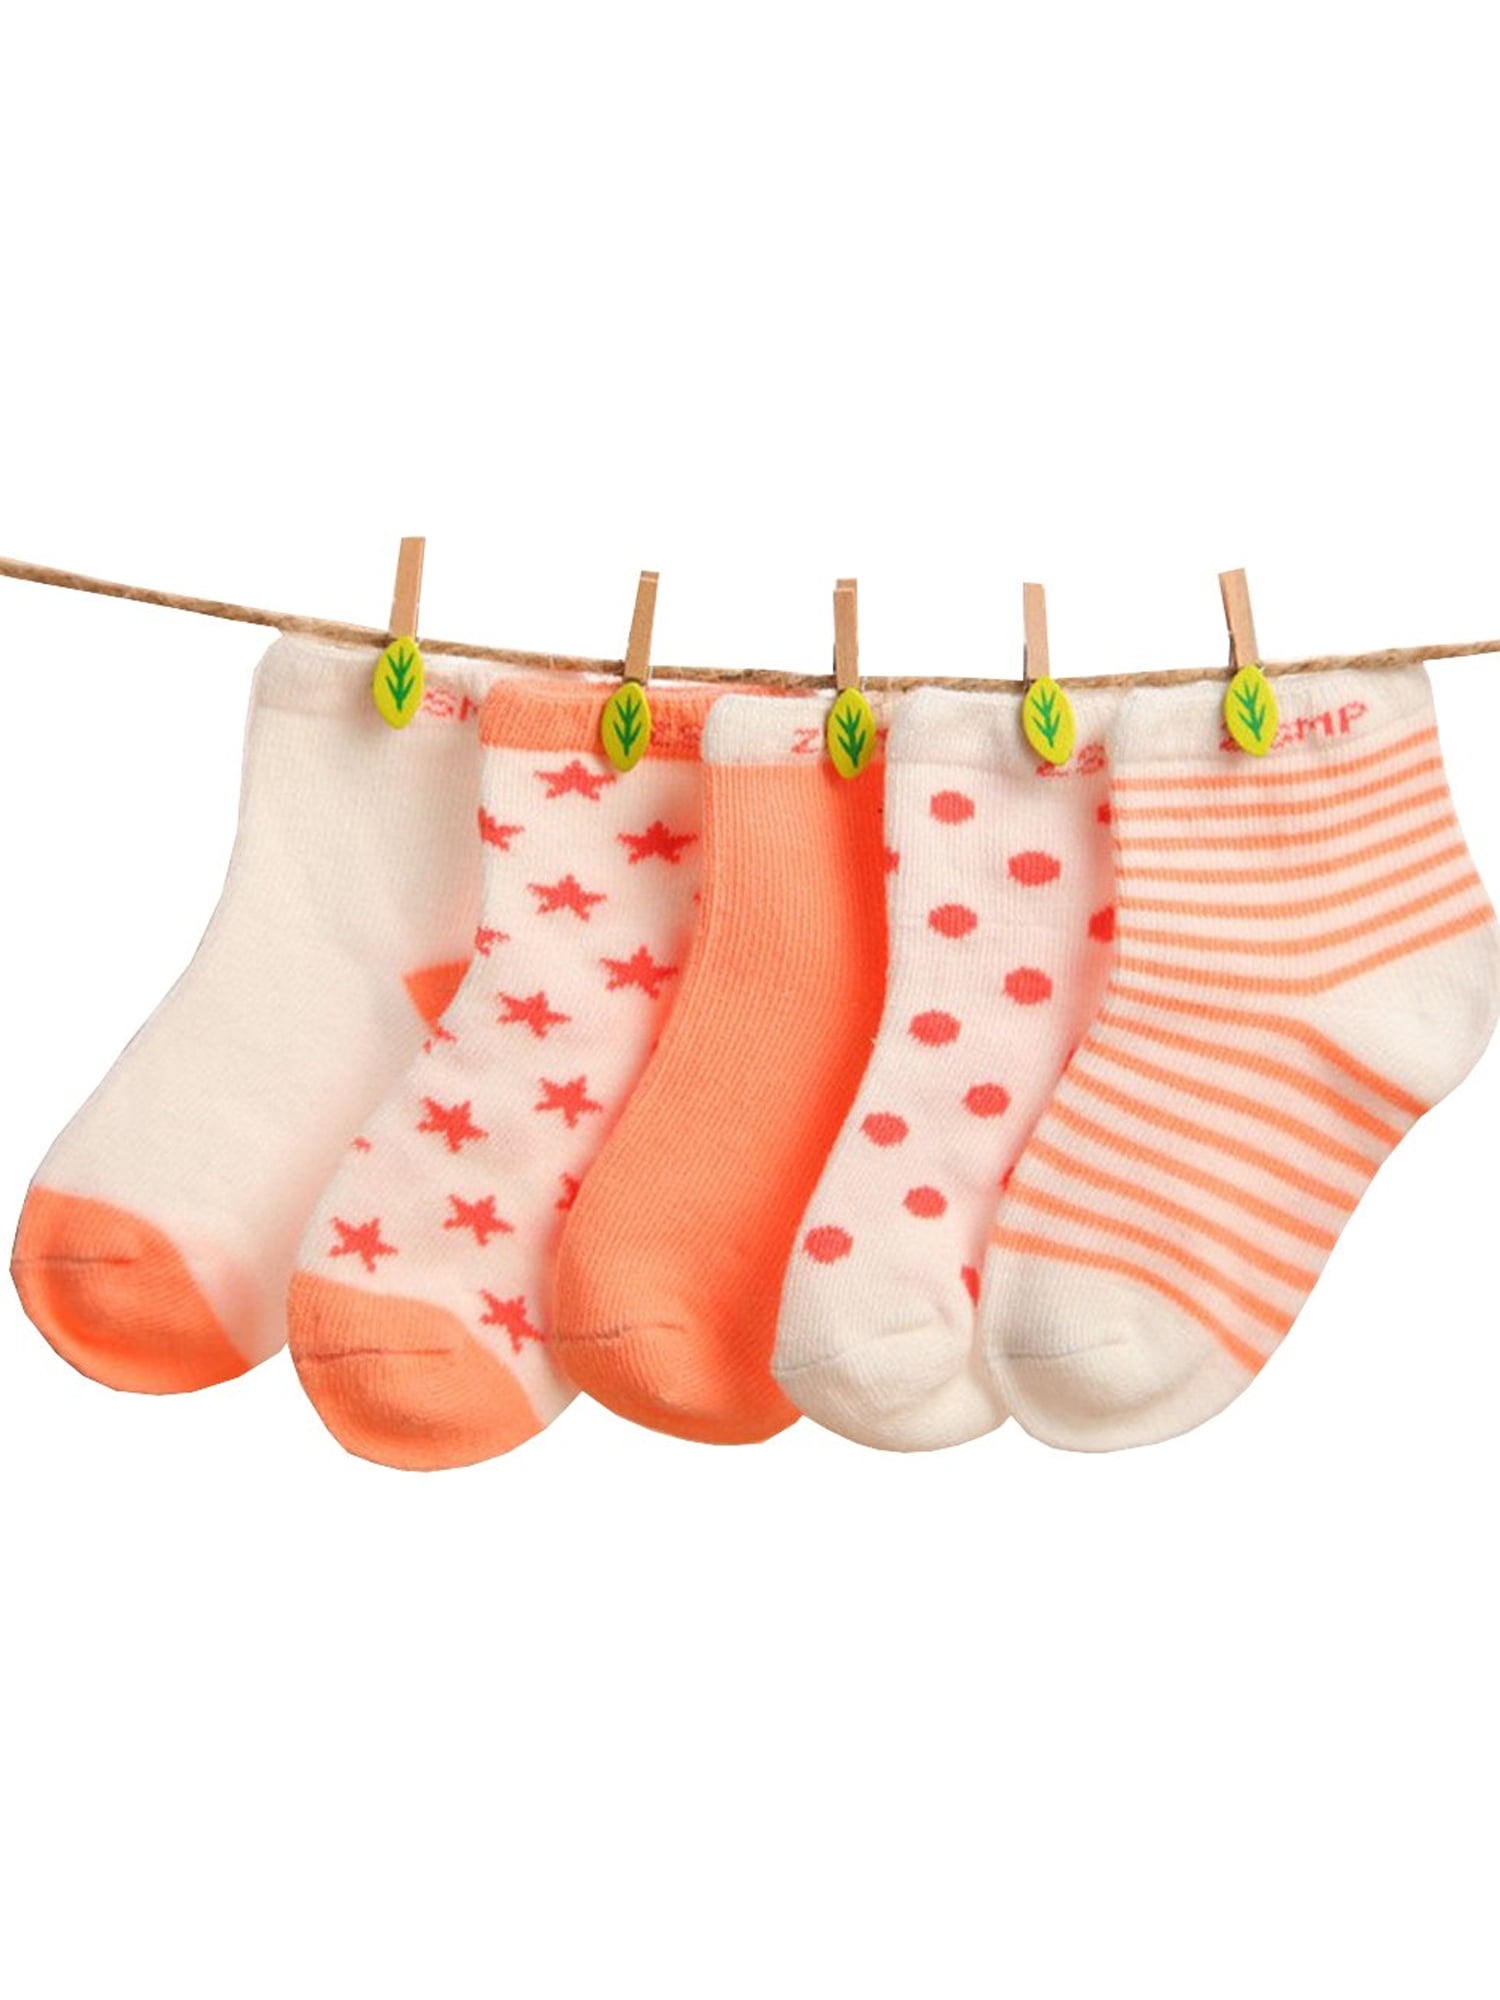 5 Pairs NewBorn Baby Boy Girl Cartoon Cotton Socks Infant Toddler Kids Cute Sock